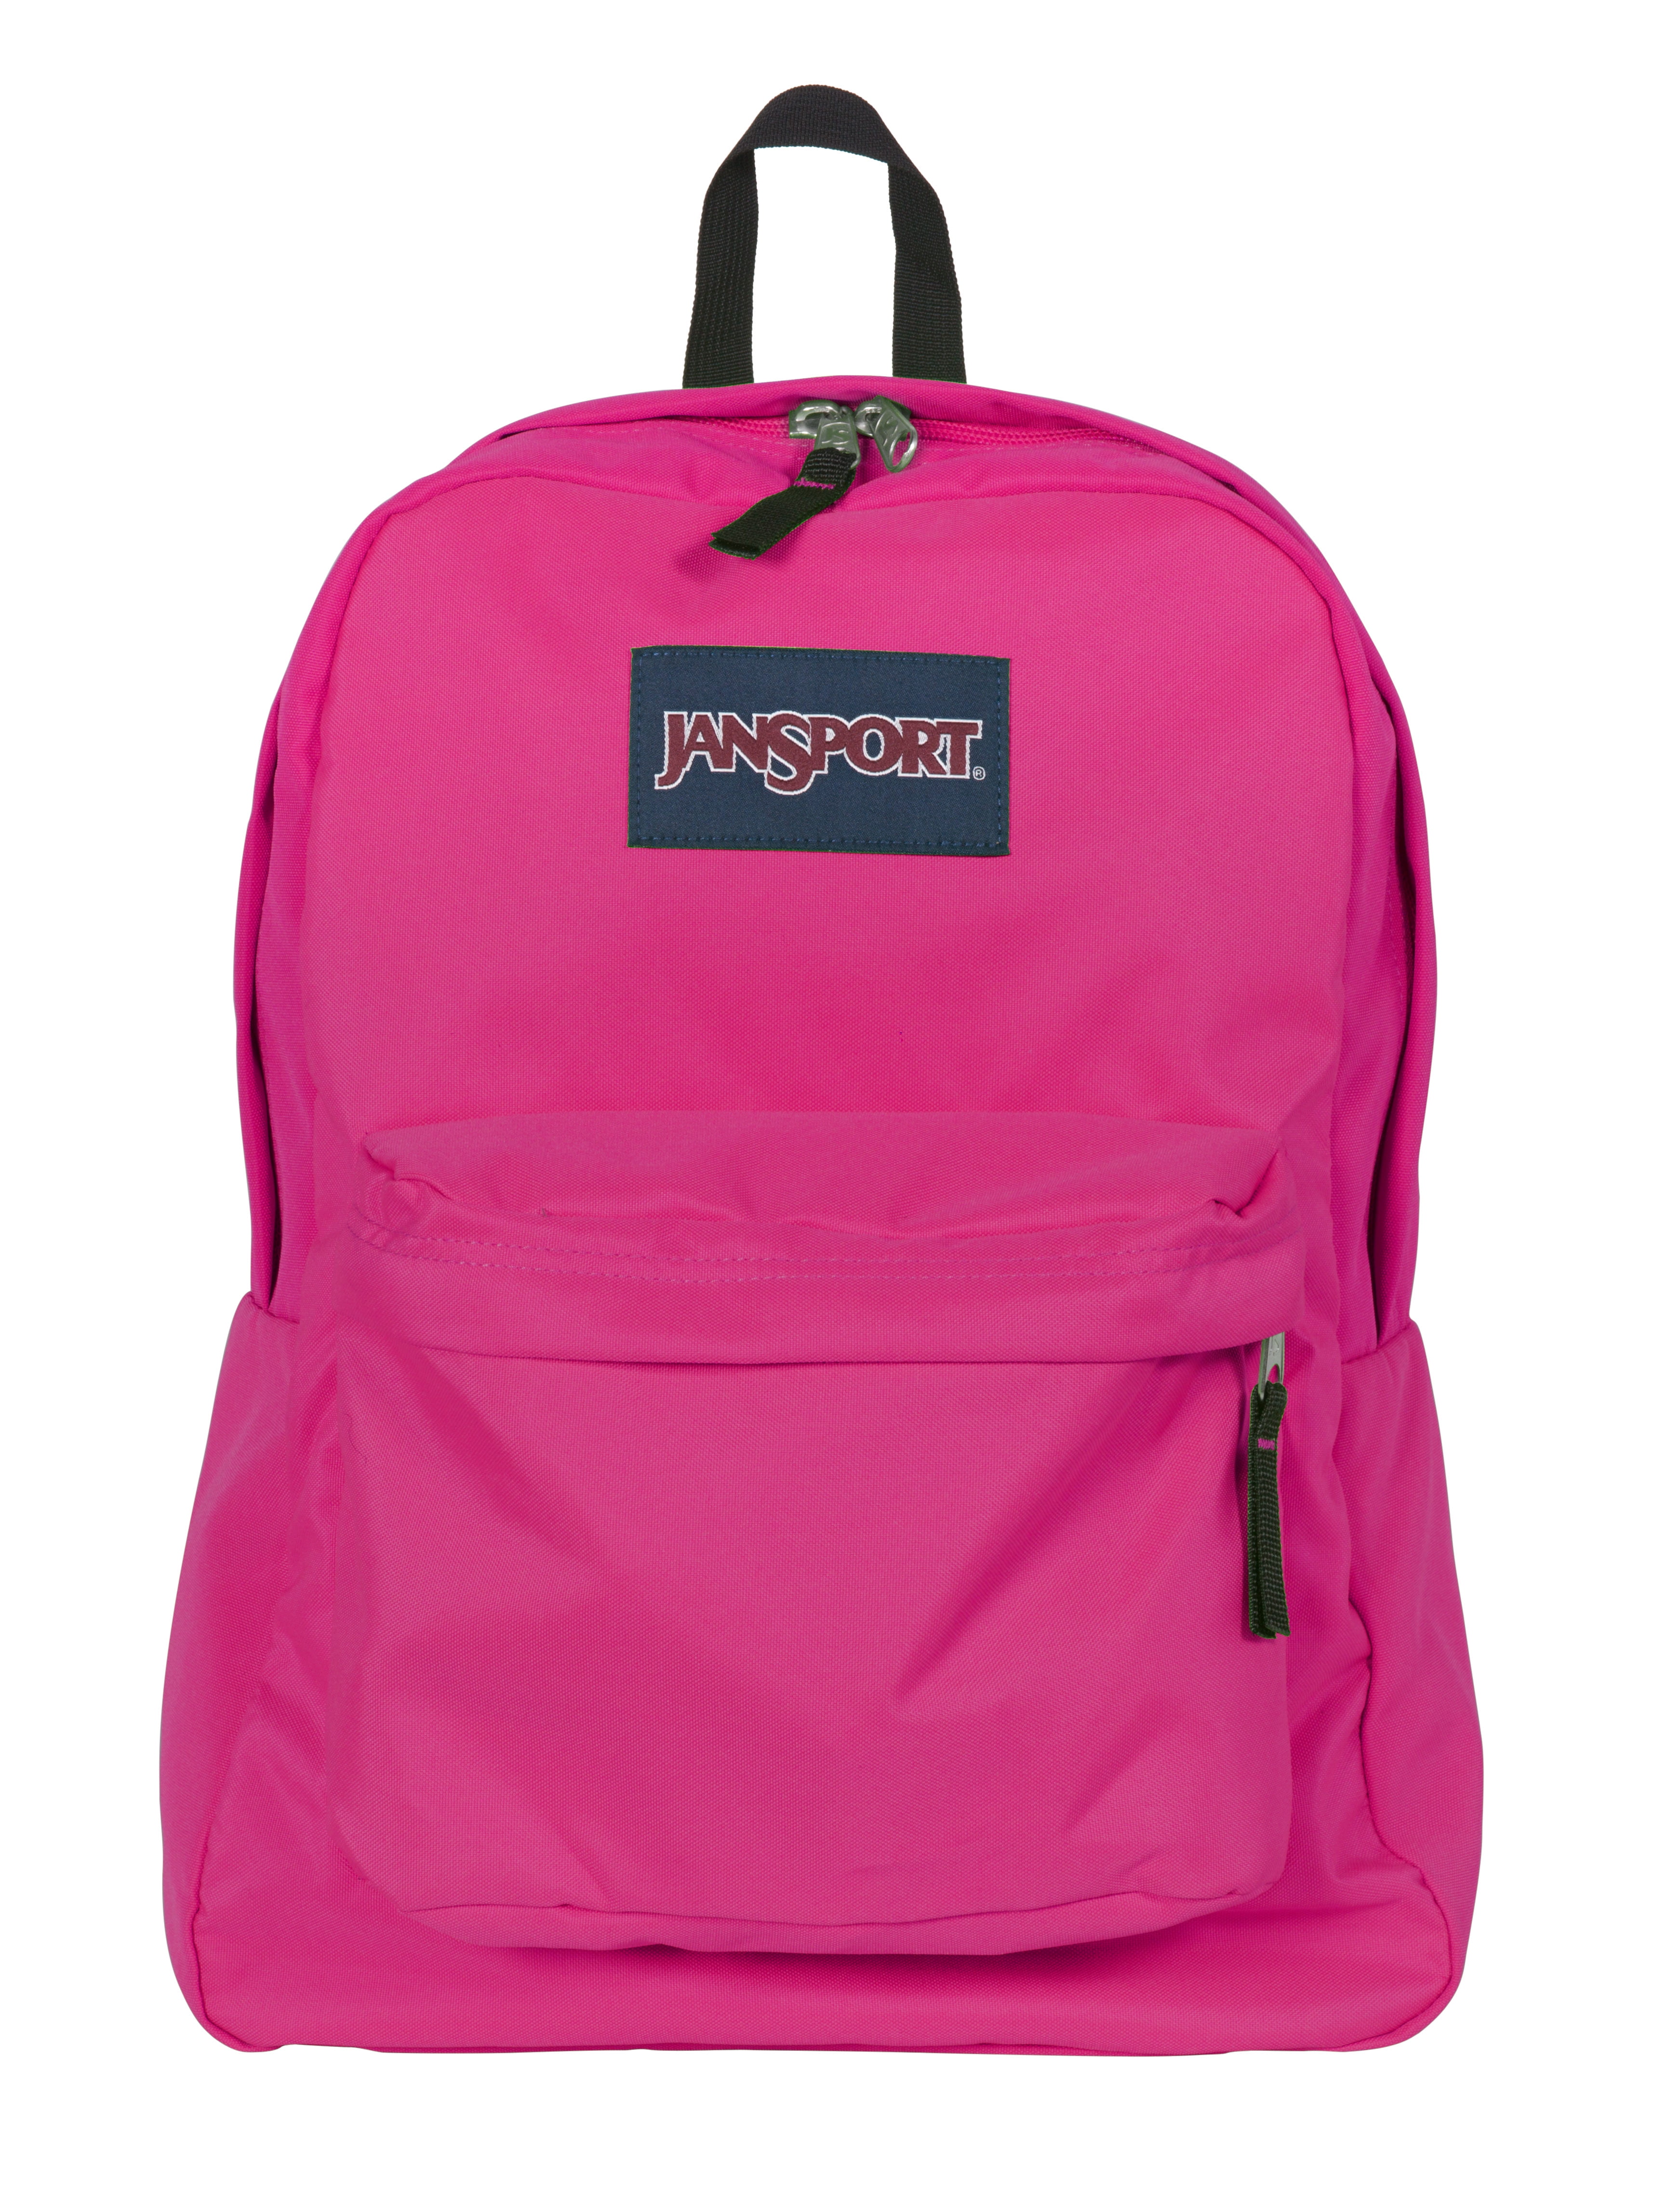 Superbreak Backpack - Cyber Pink - Walmart.com